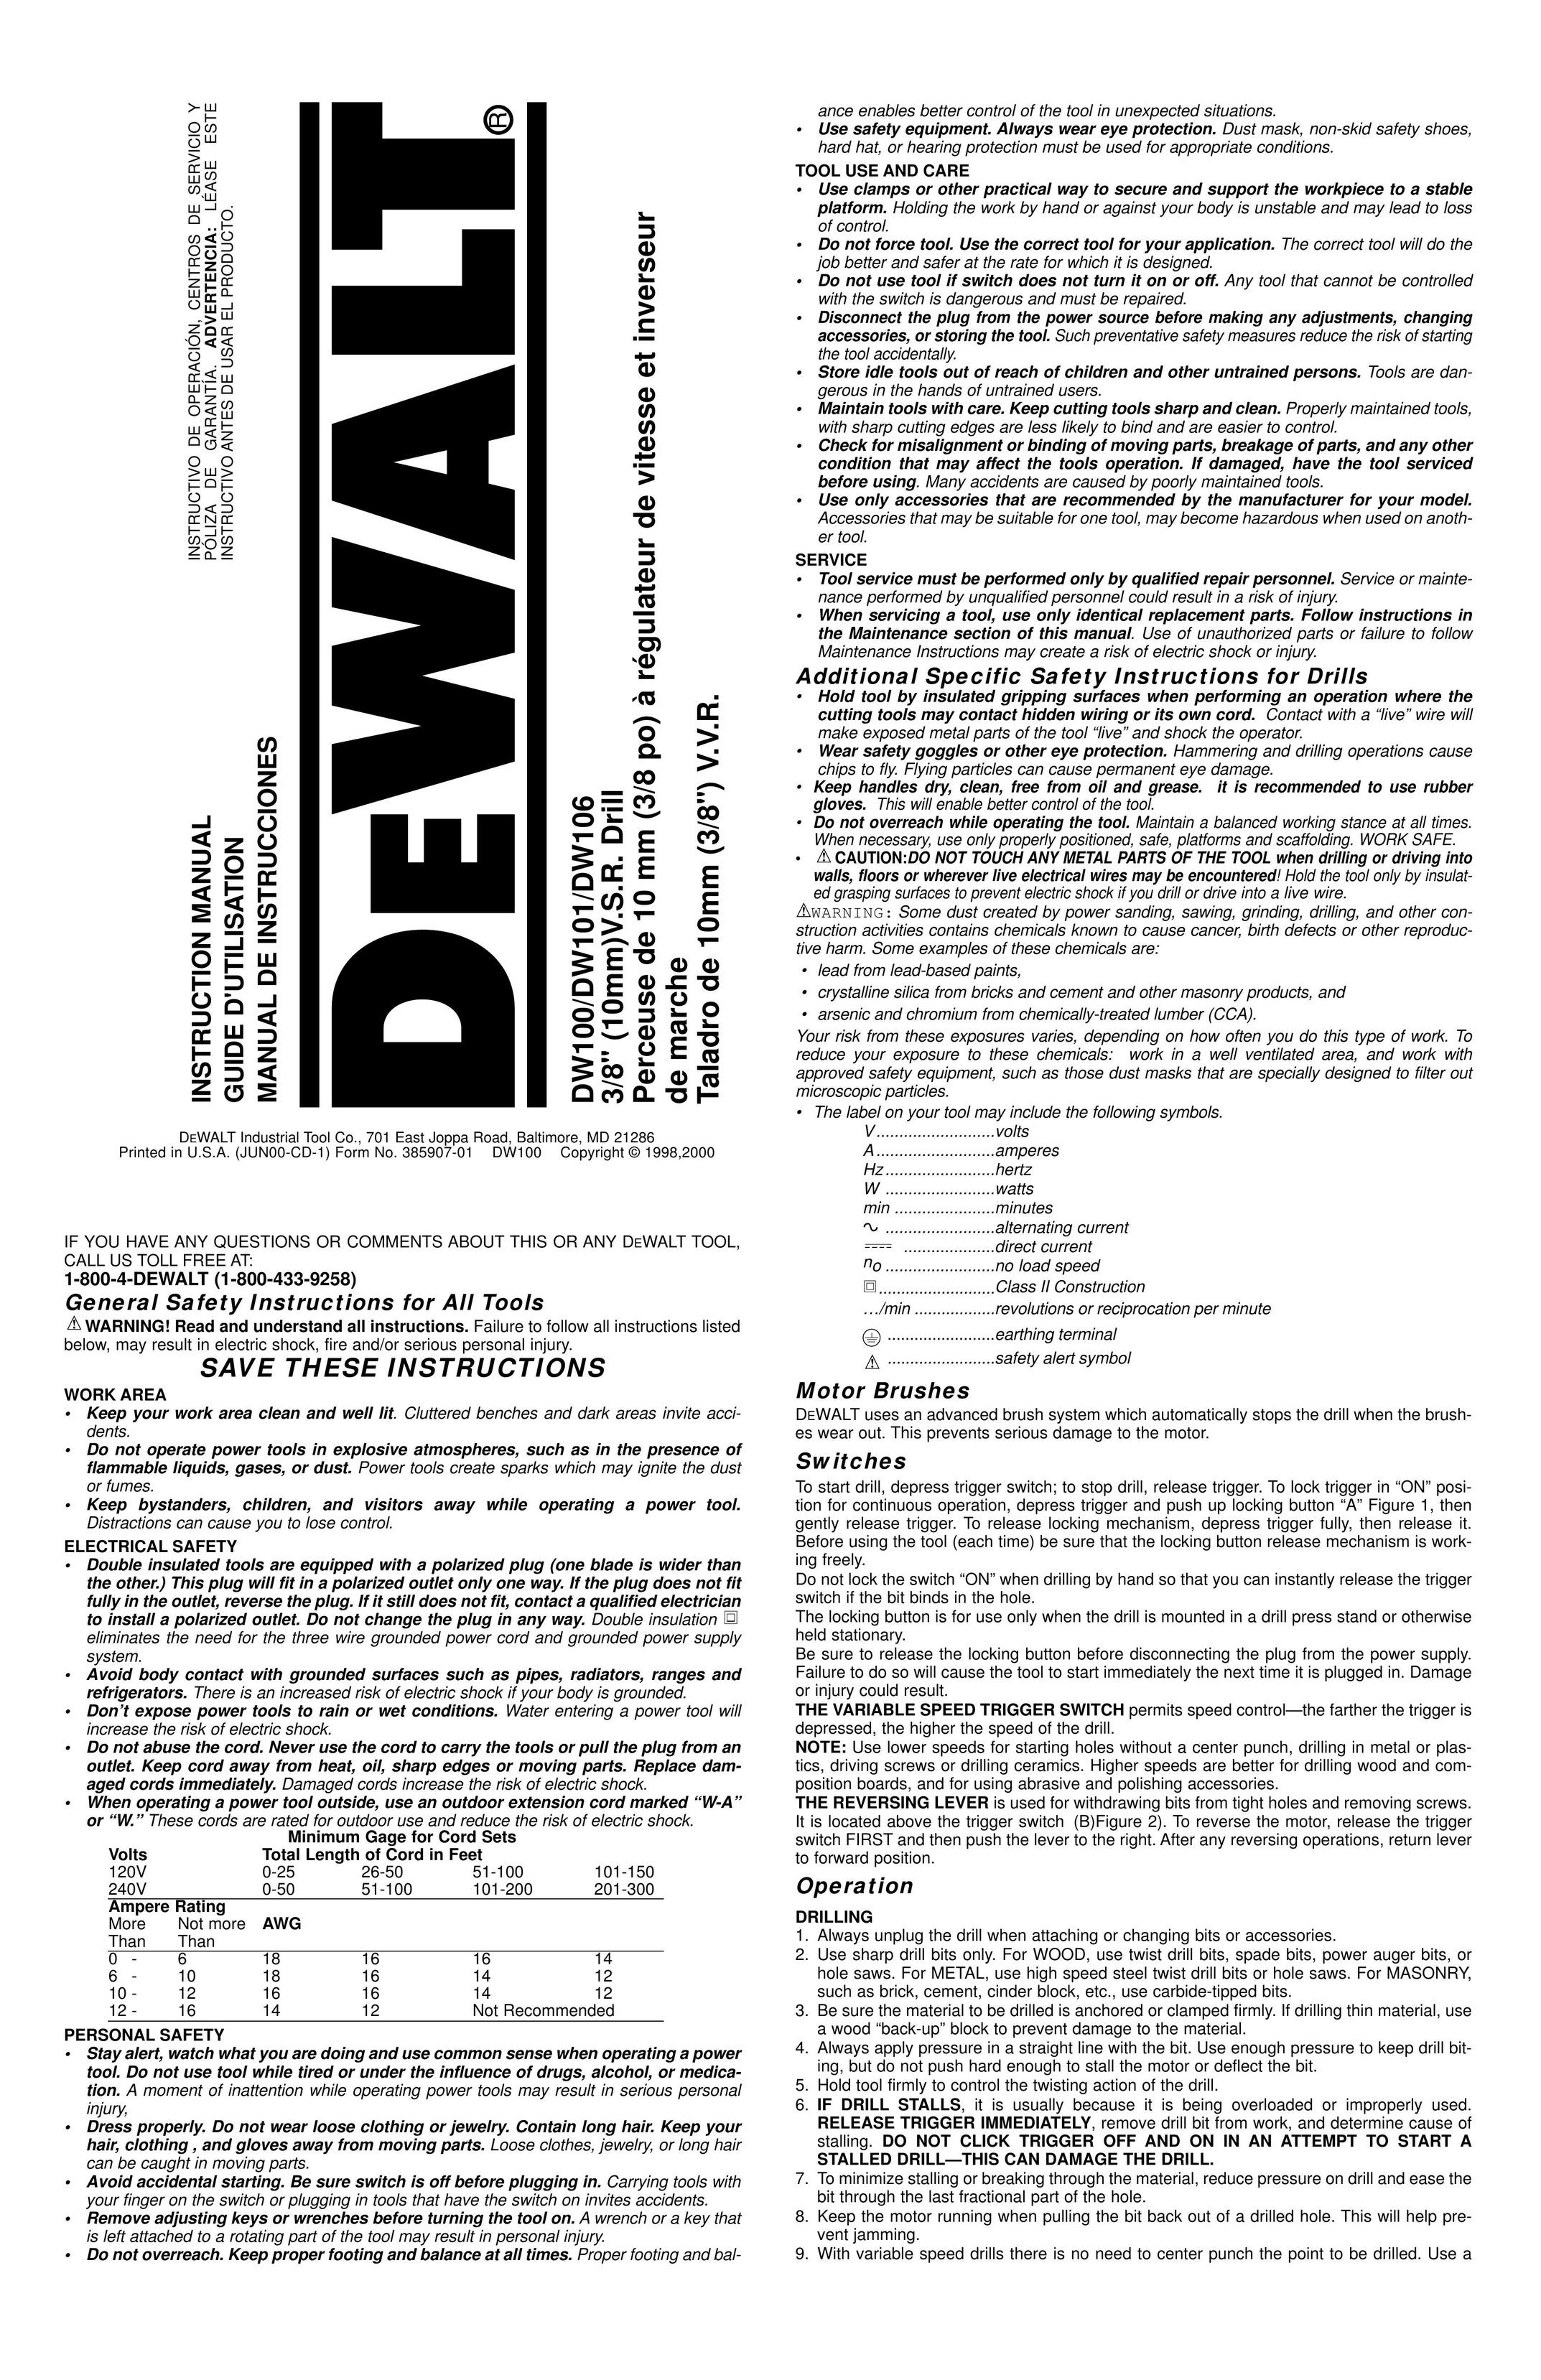 DeWalt DW101 Drill User Manual